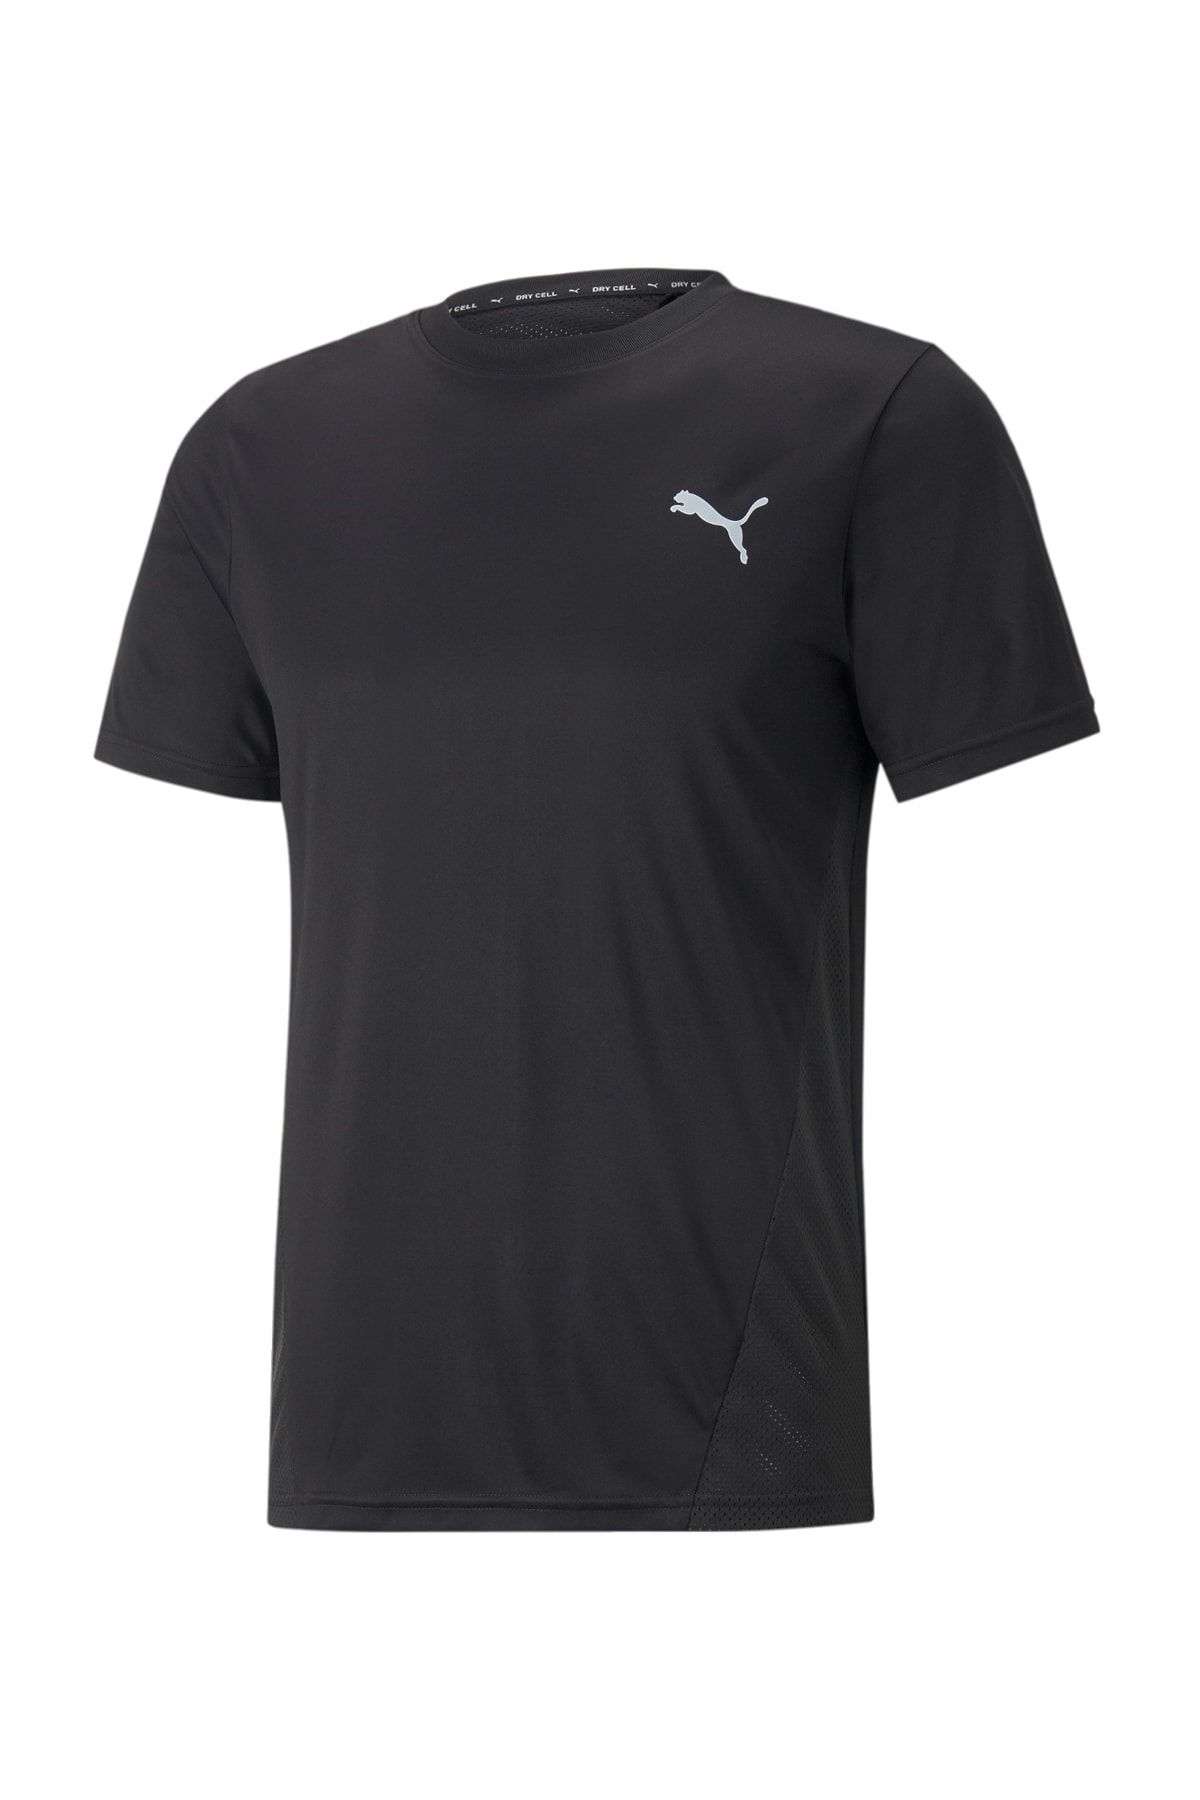 Regular - Schwarz T-Shirt Puma - Trendyol - Fit